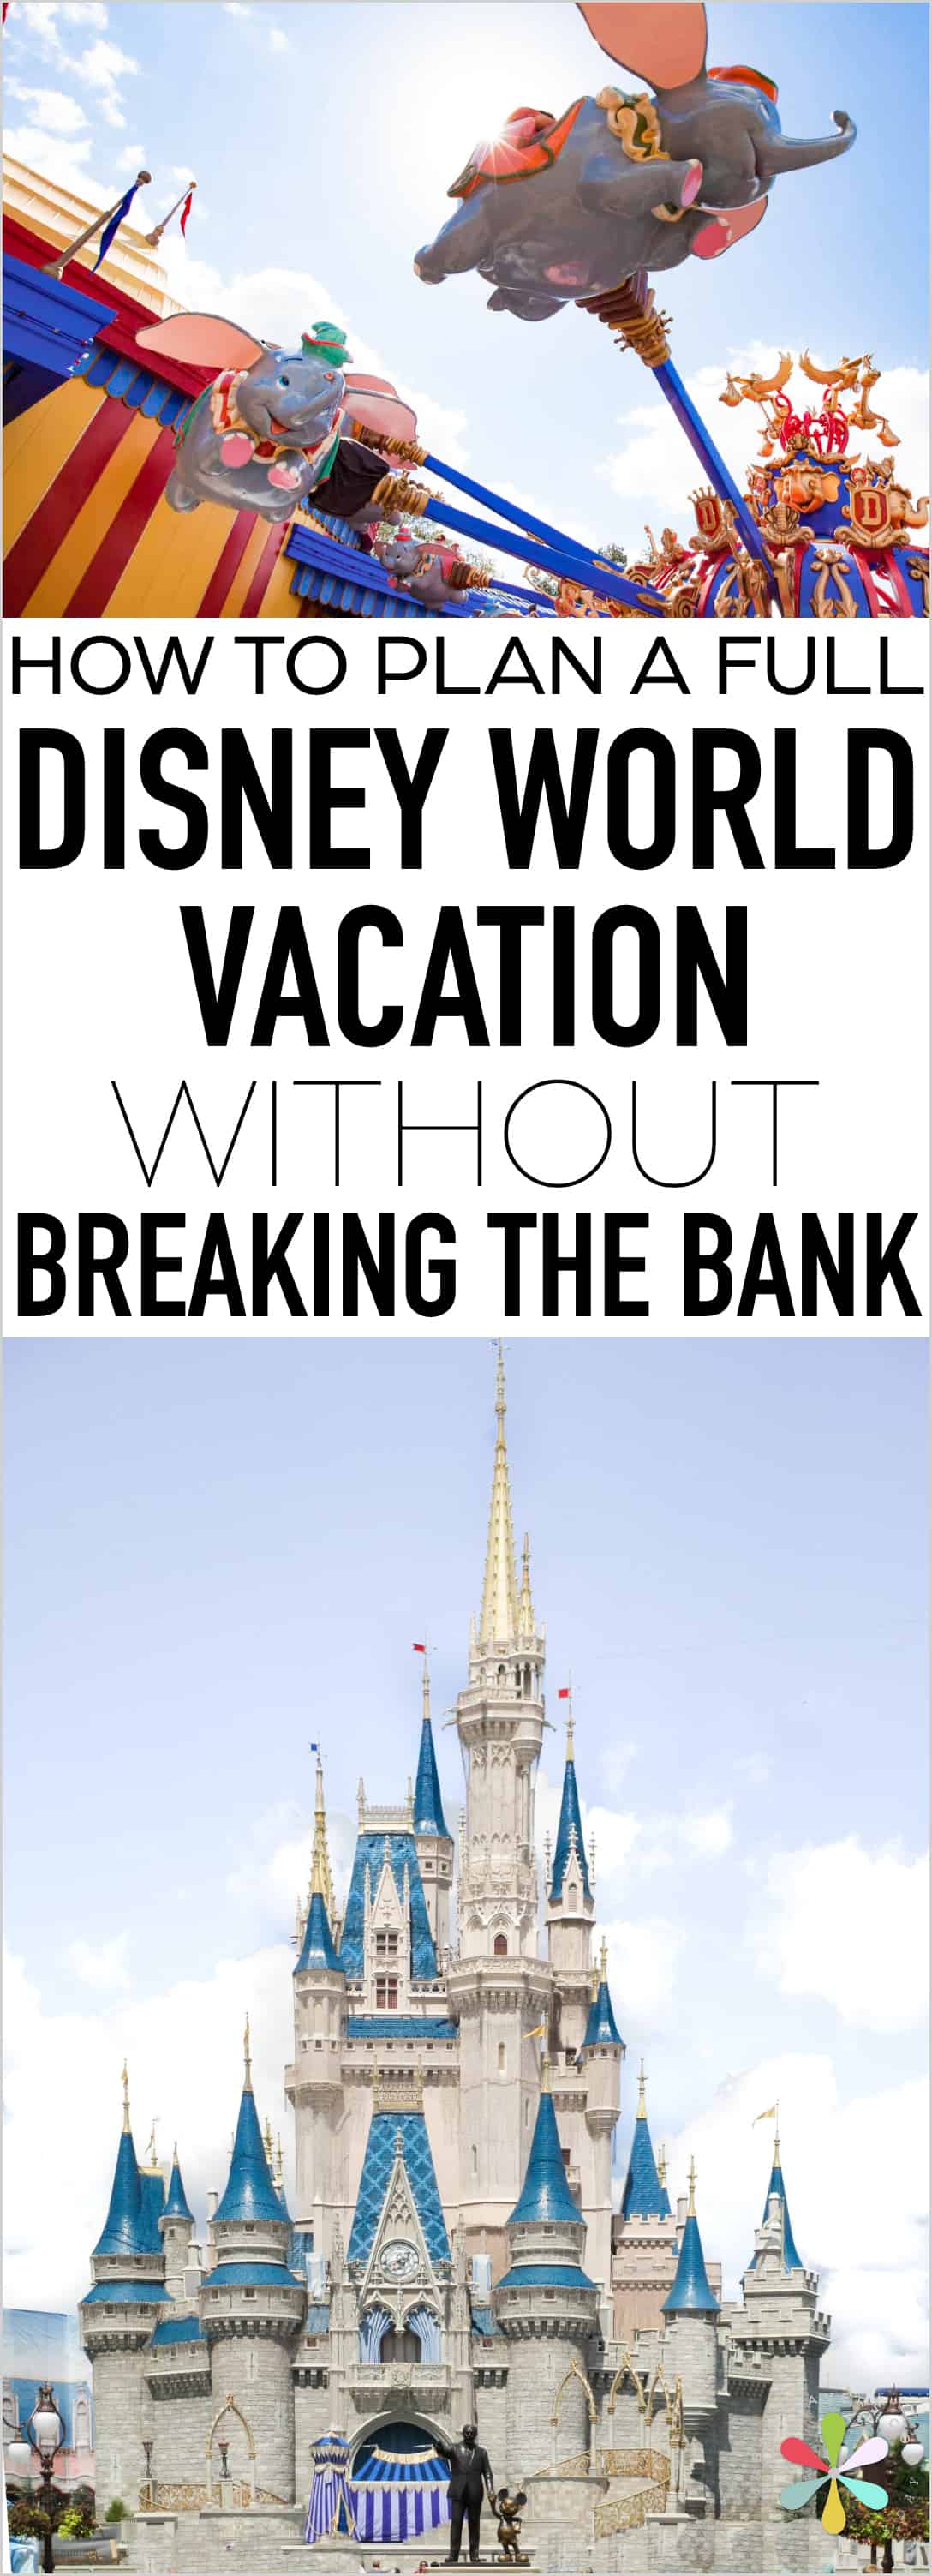 Disney World Vacation on a budget